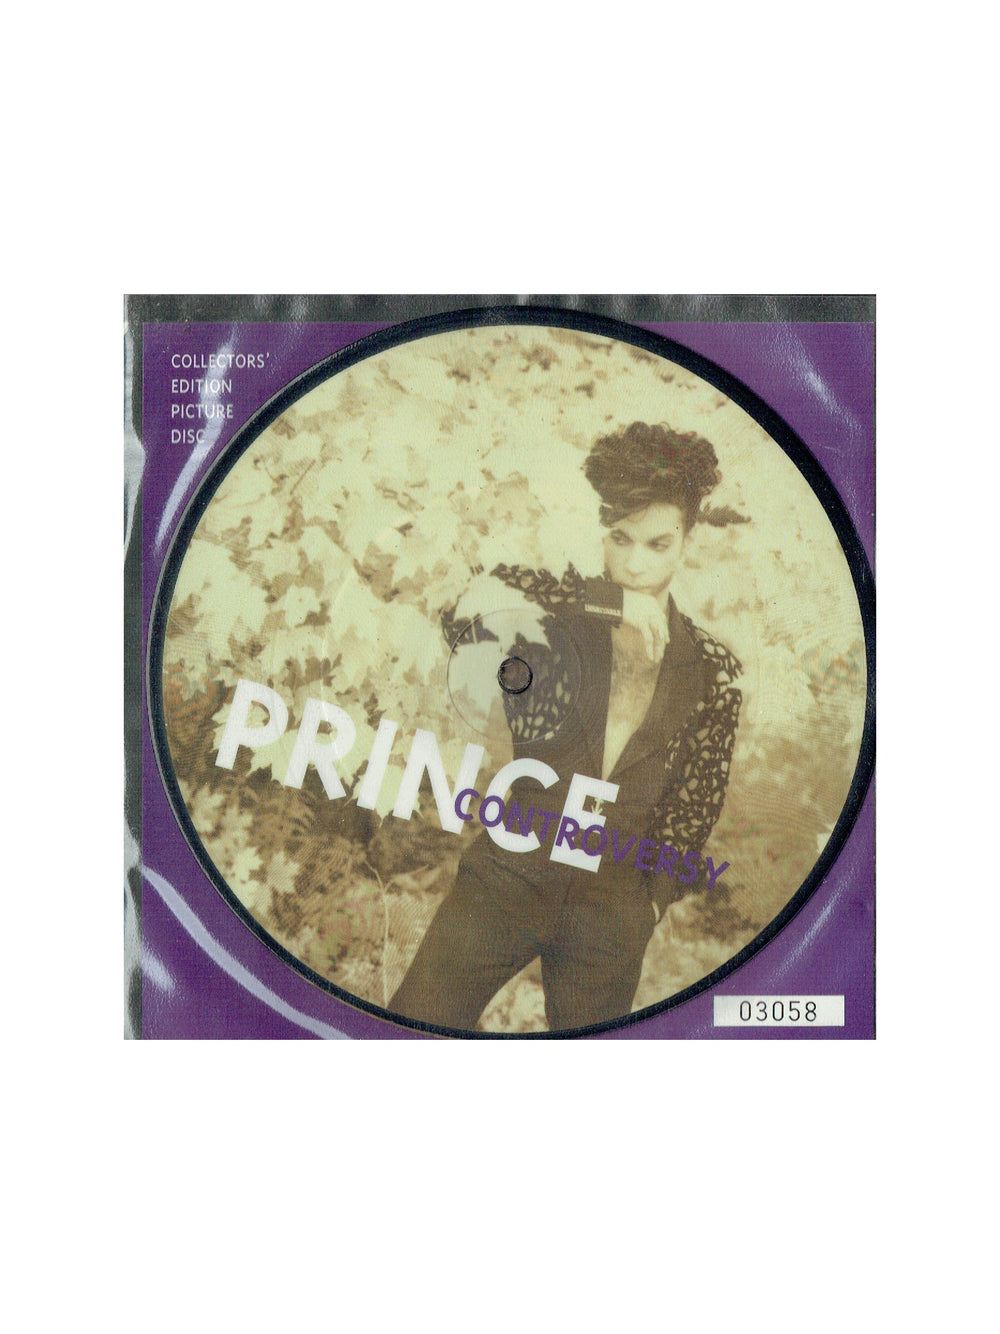 Prince – Controversy The Future 7 Inch  Picture Disc 04327